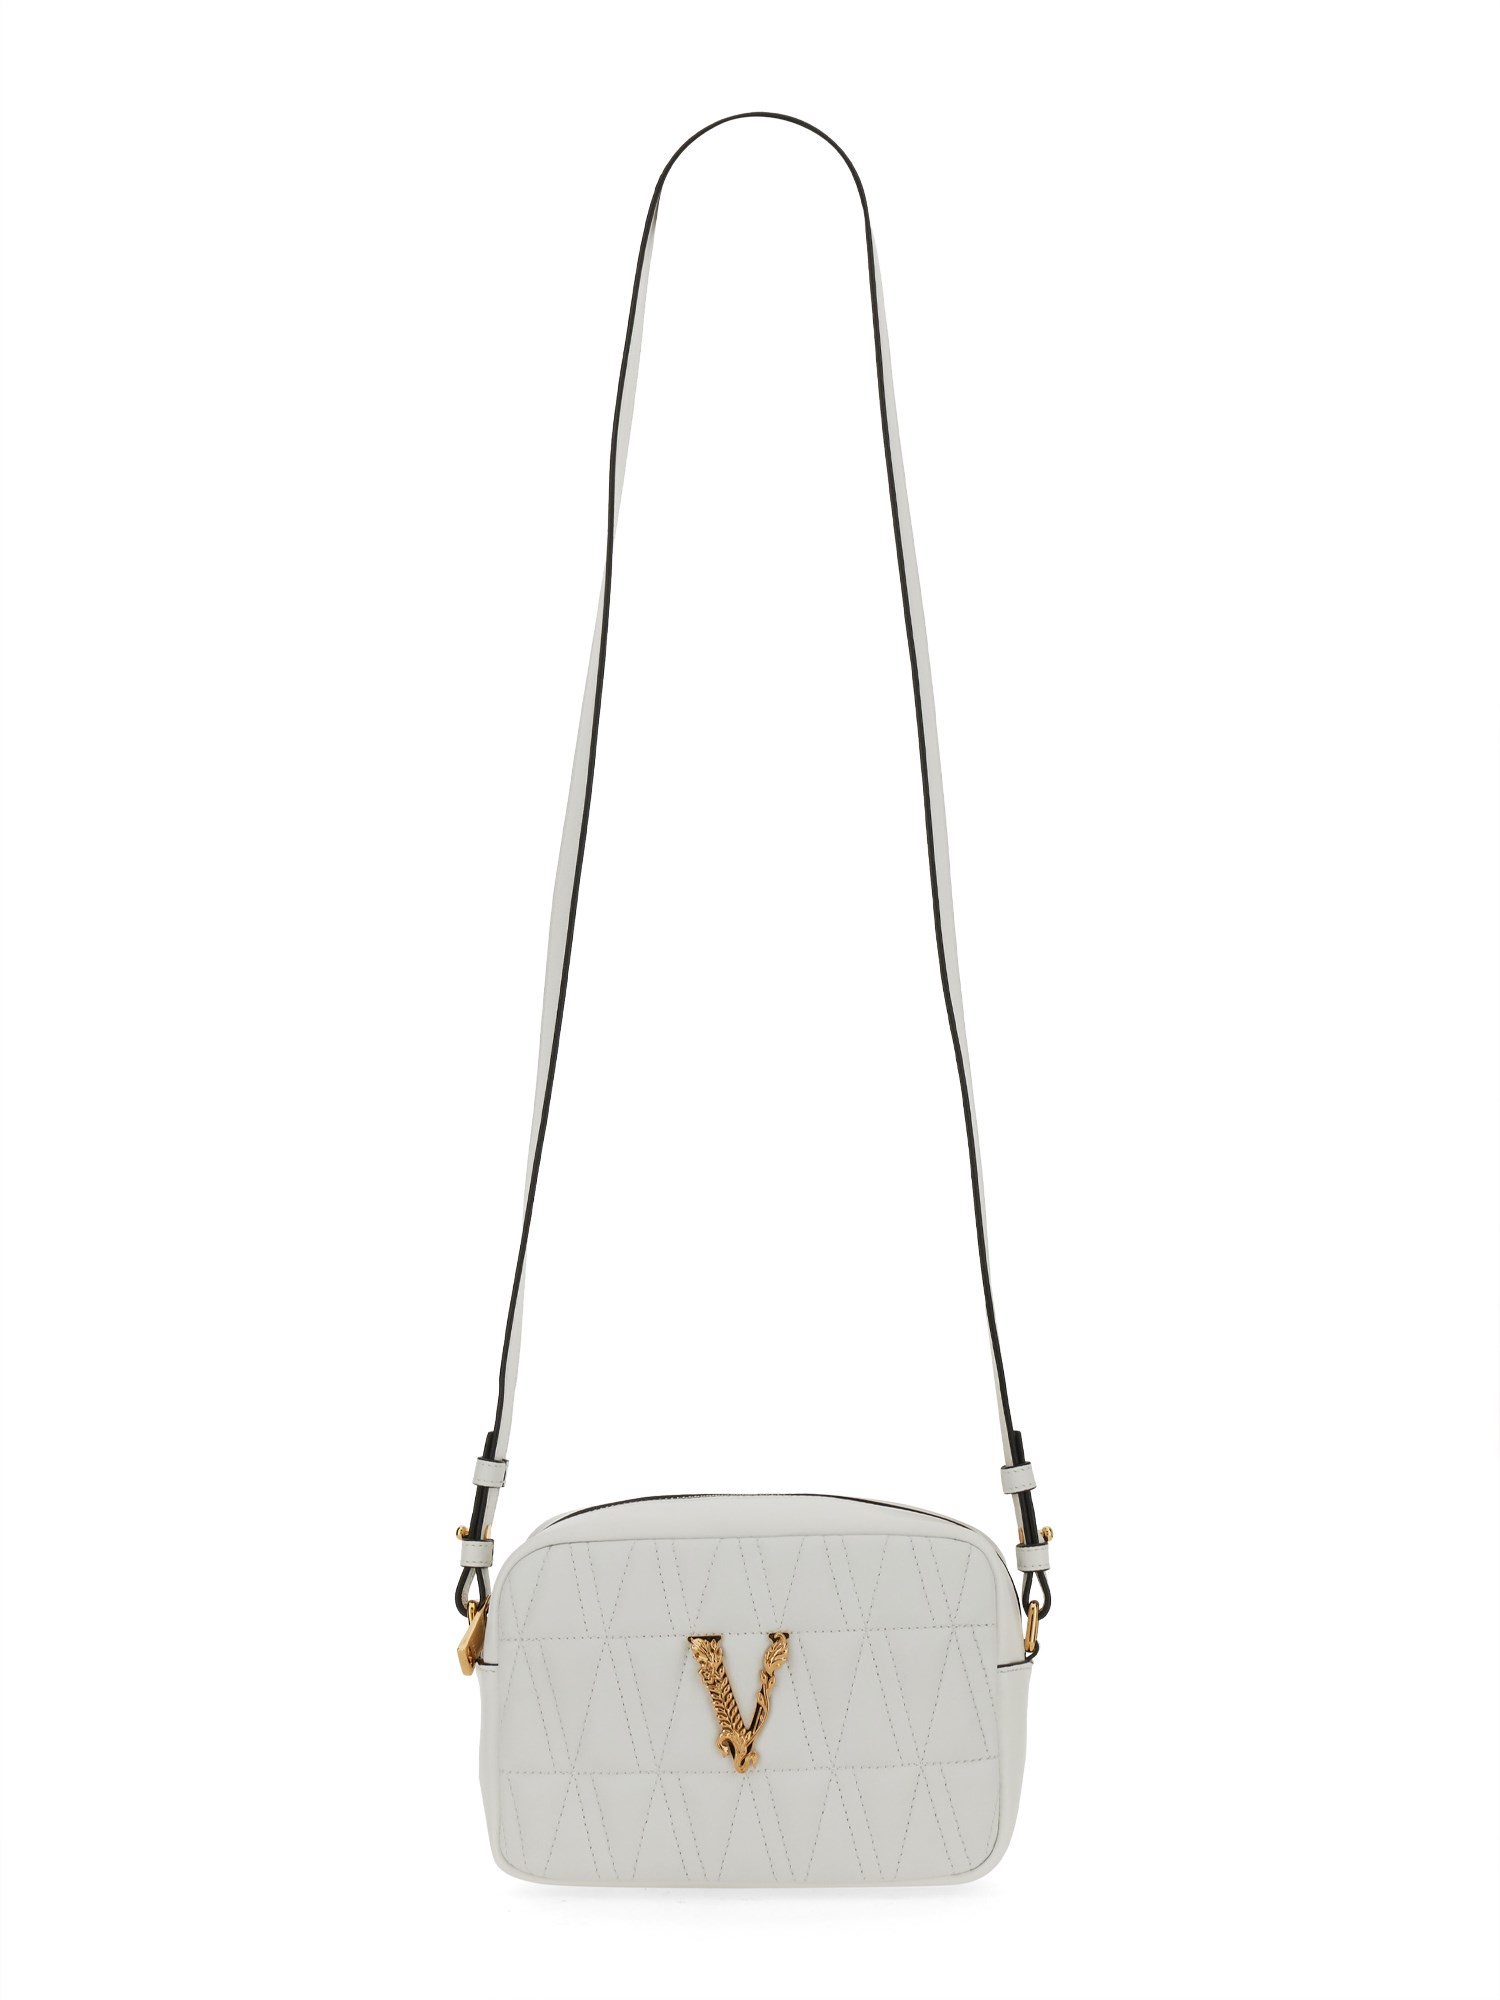 Versace versace "virtus" shoulder bag